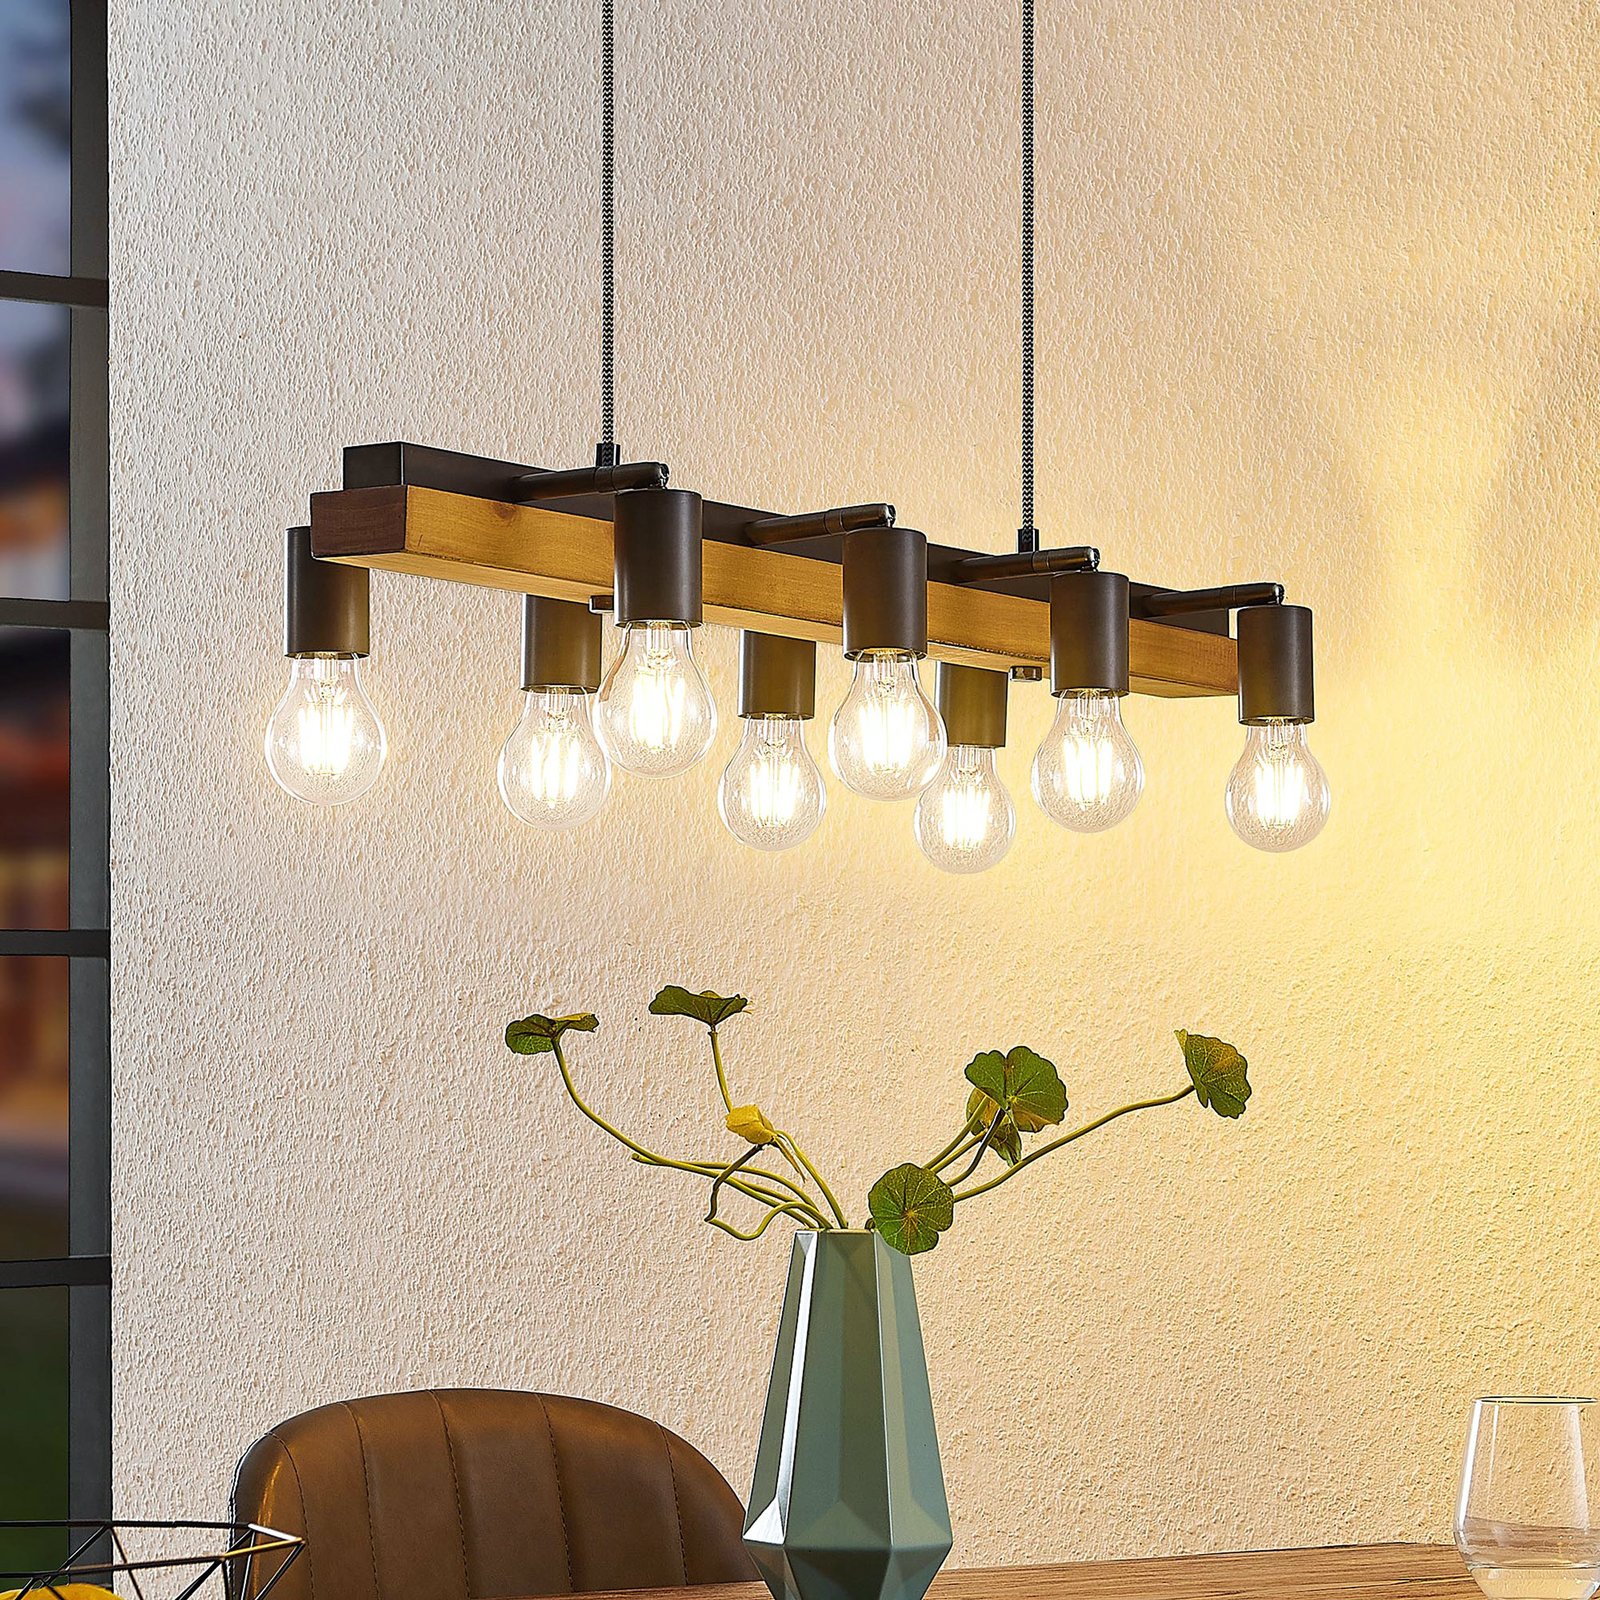 Lindby Morleen - hanging light, 8-bulb, dark wood